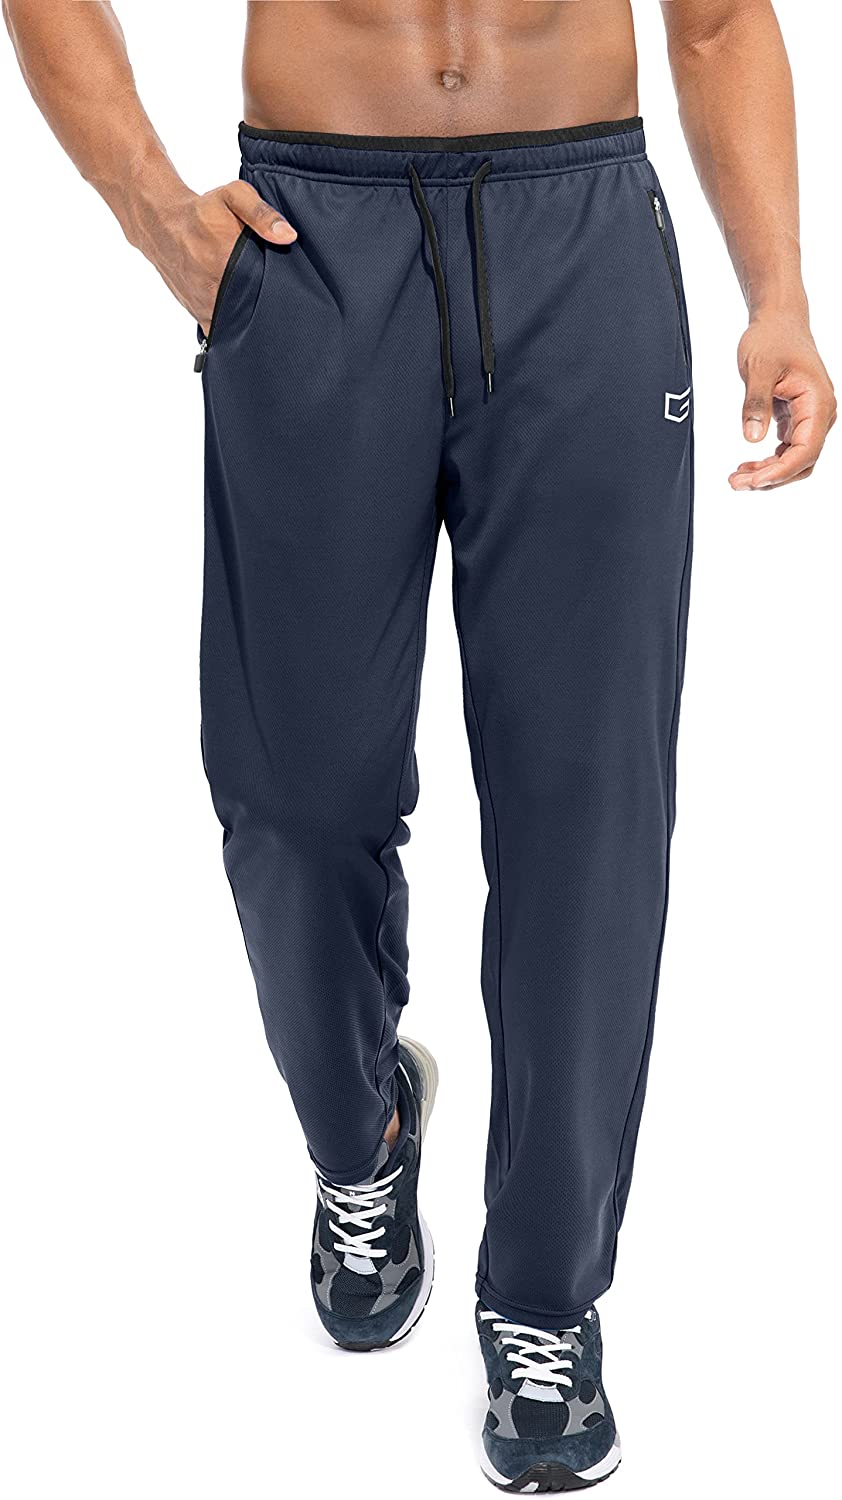 G Gradual Men's Sweatpants with Zipper Pockets Open Bottom Athletic Pants for Men Workout Running Jogging Lounge 